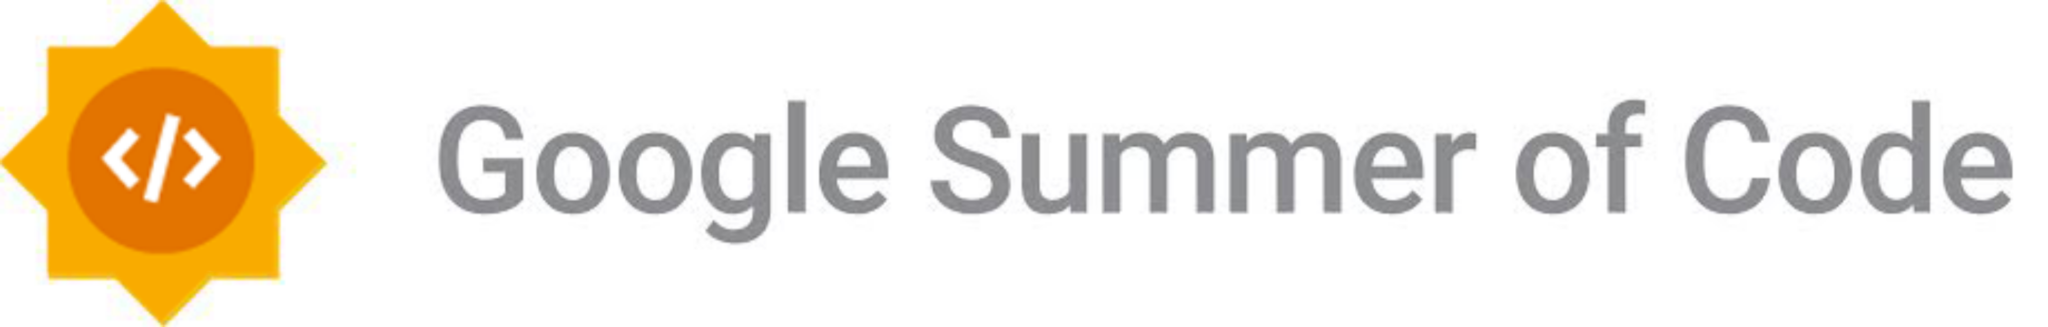 52°North is Google Summer of Code Mentoring Organization